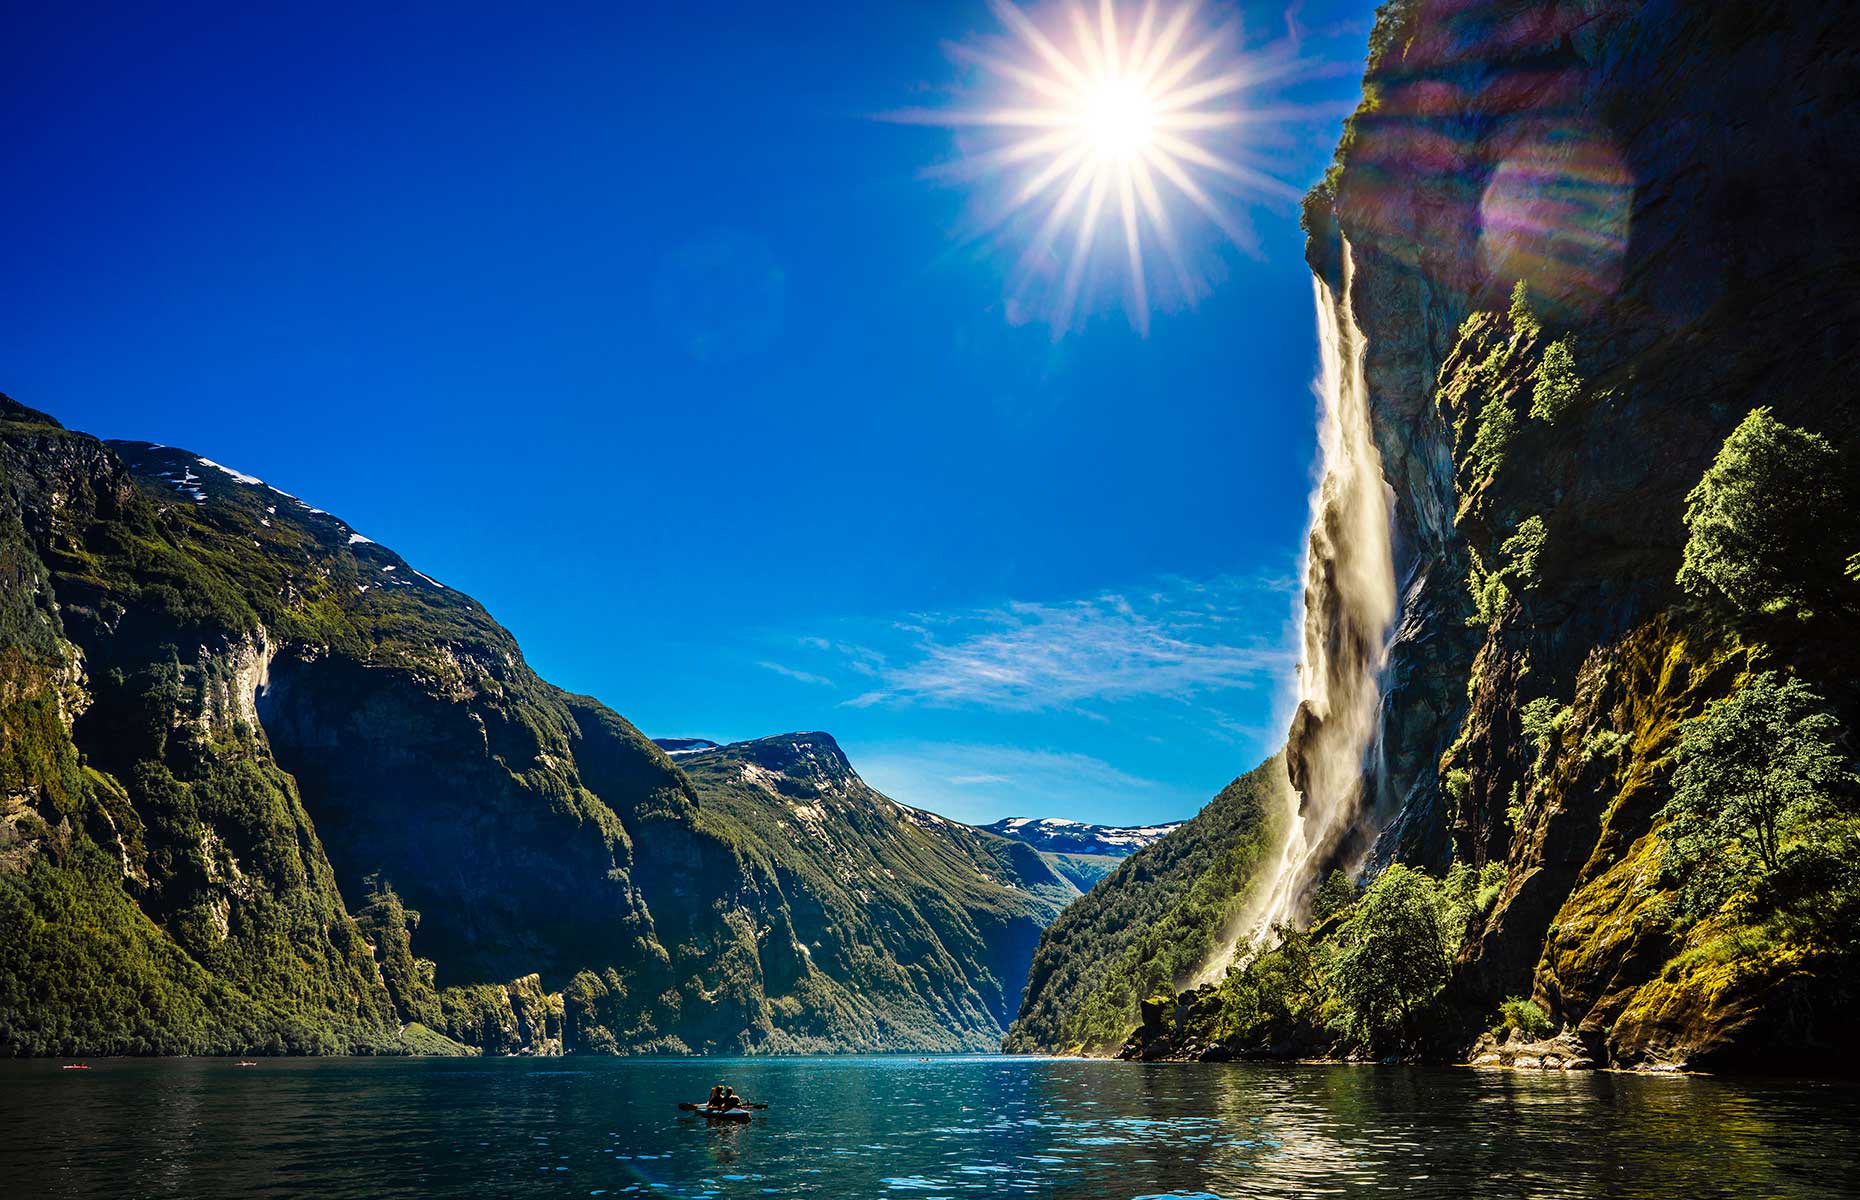 Geiranger Fjord. Norway (Image: Andrey Armyagov/Shutterstock)